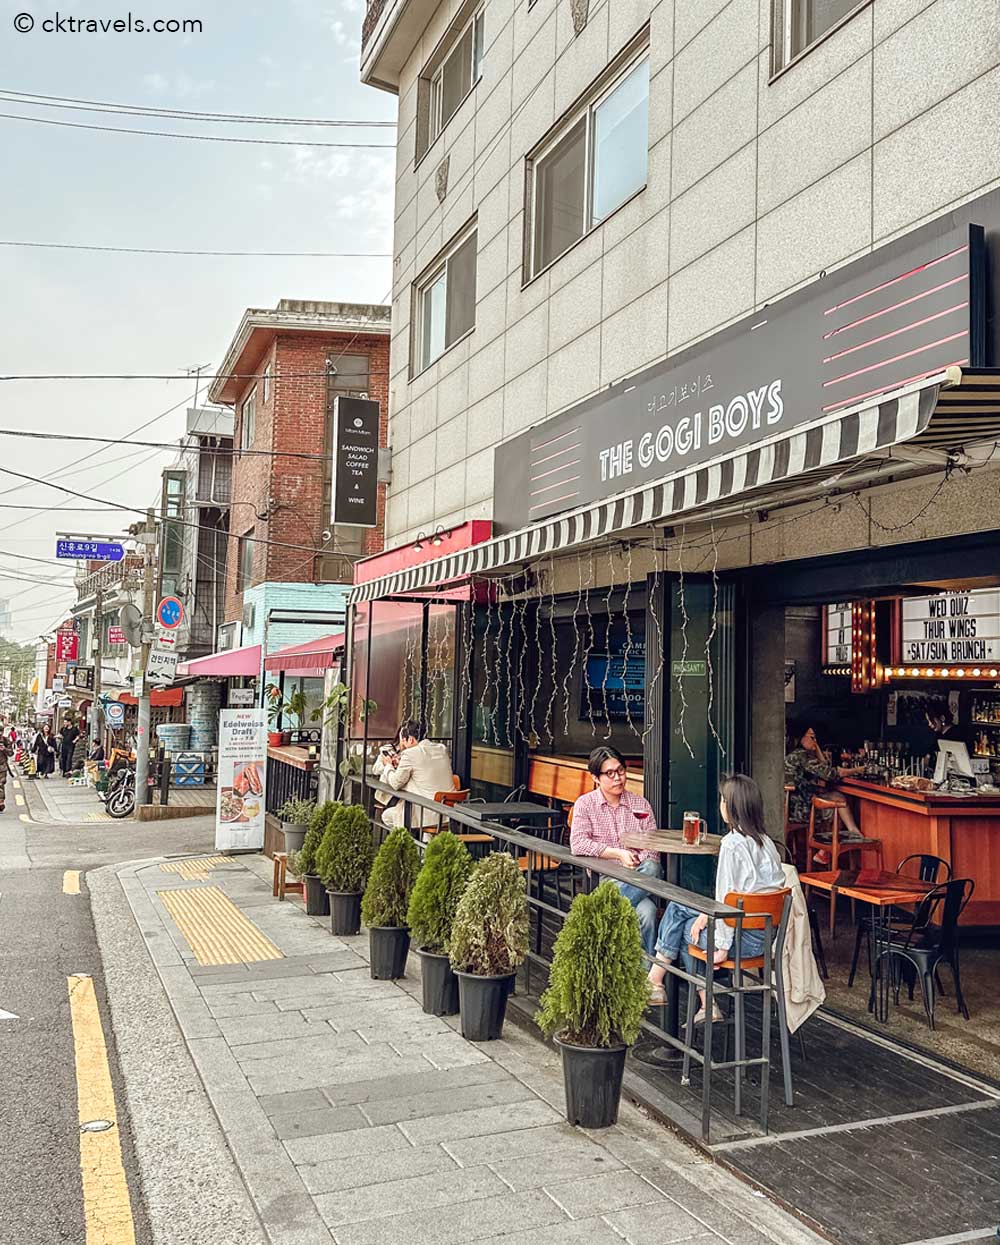 Gogi boys restaurant Itaewon